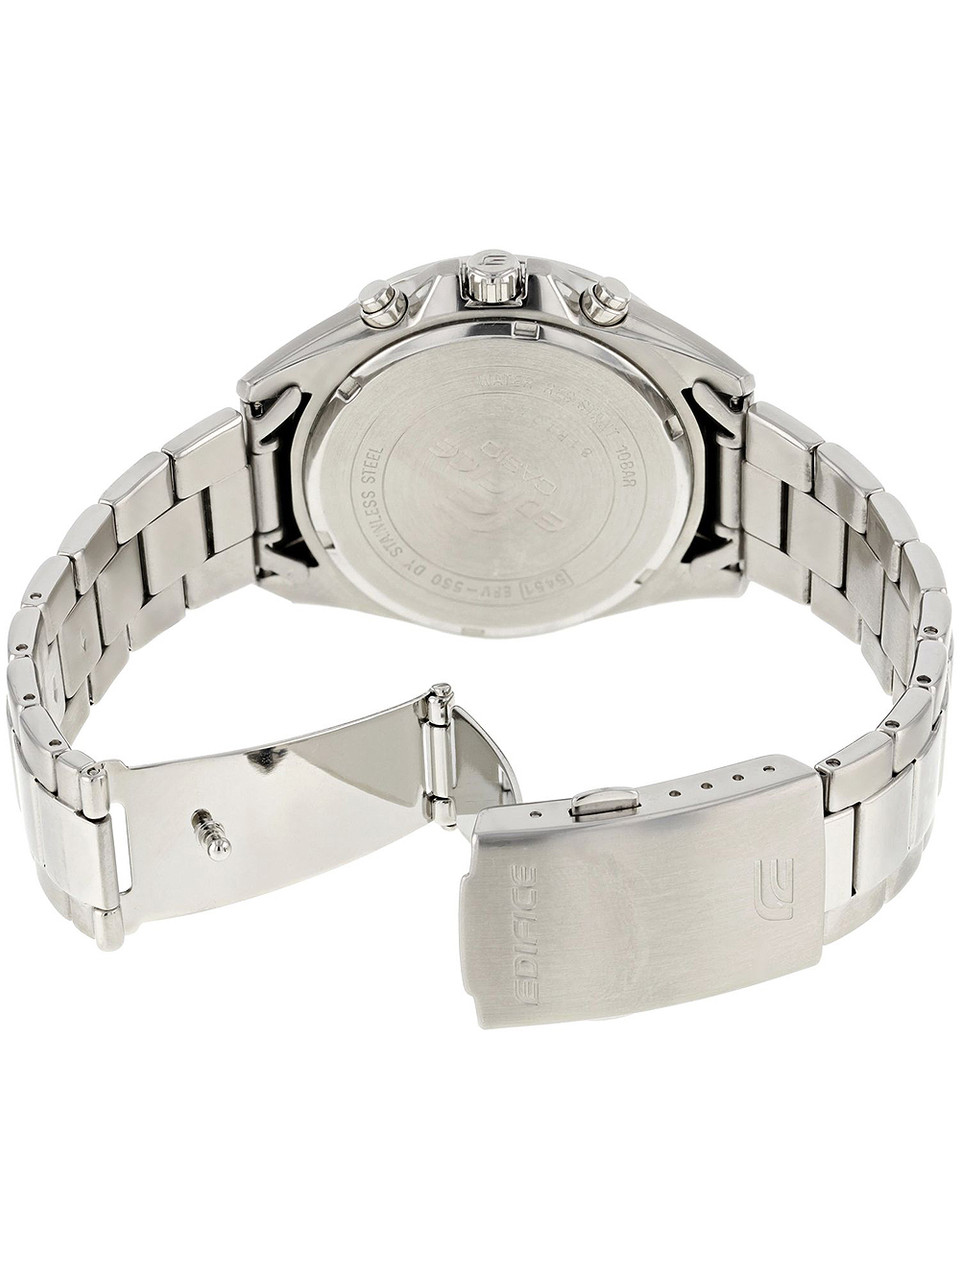 EFV-560D-1AVUEF chronograph Genuine Watches Casio 10ATM owlica Edifice | - 45mm